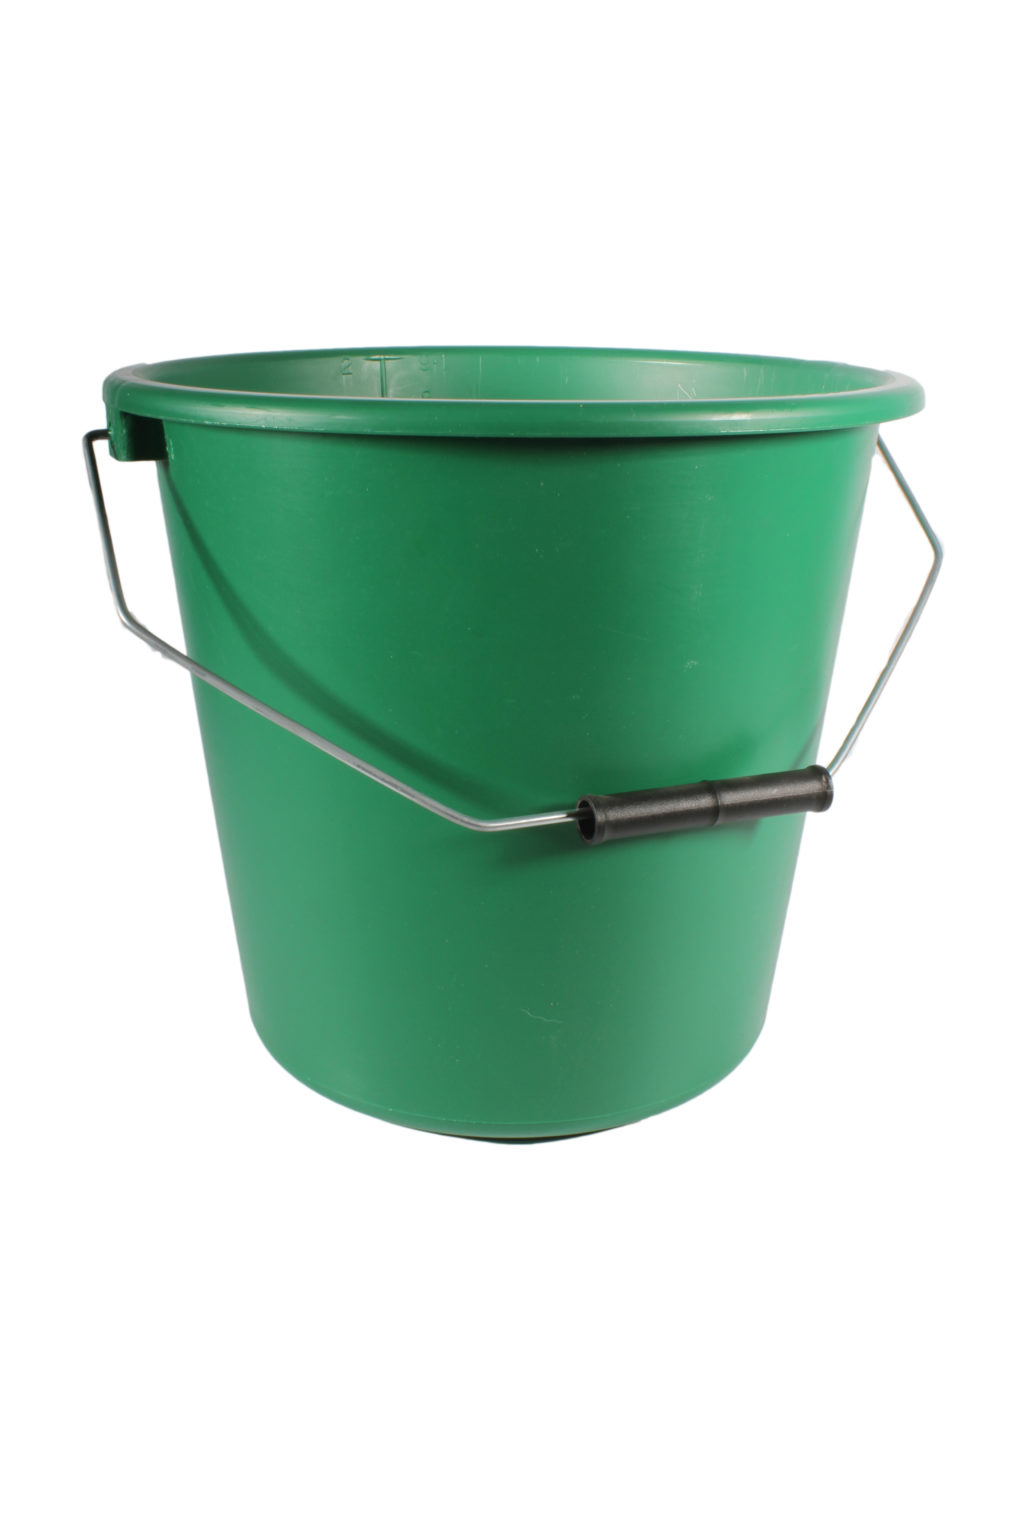 Lamina Green 2 Gallon Bucket